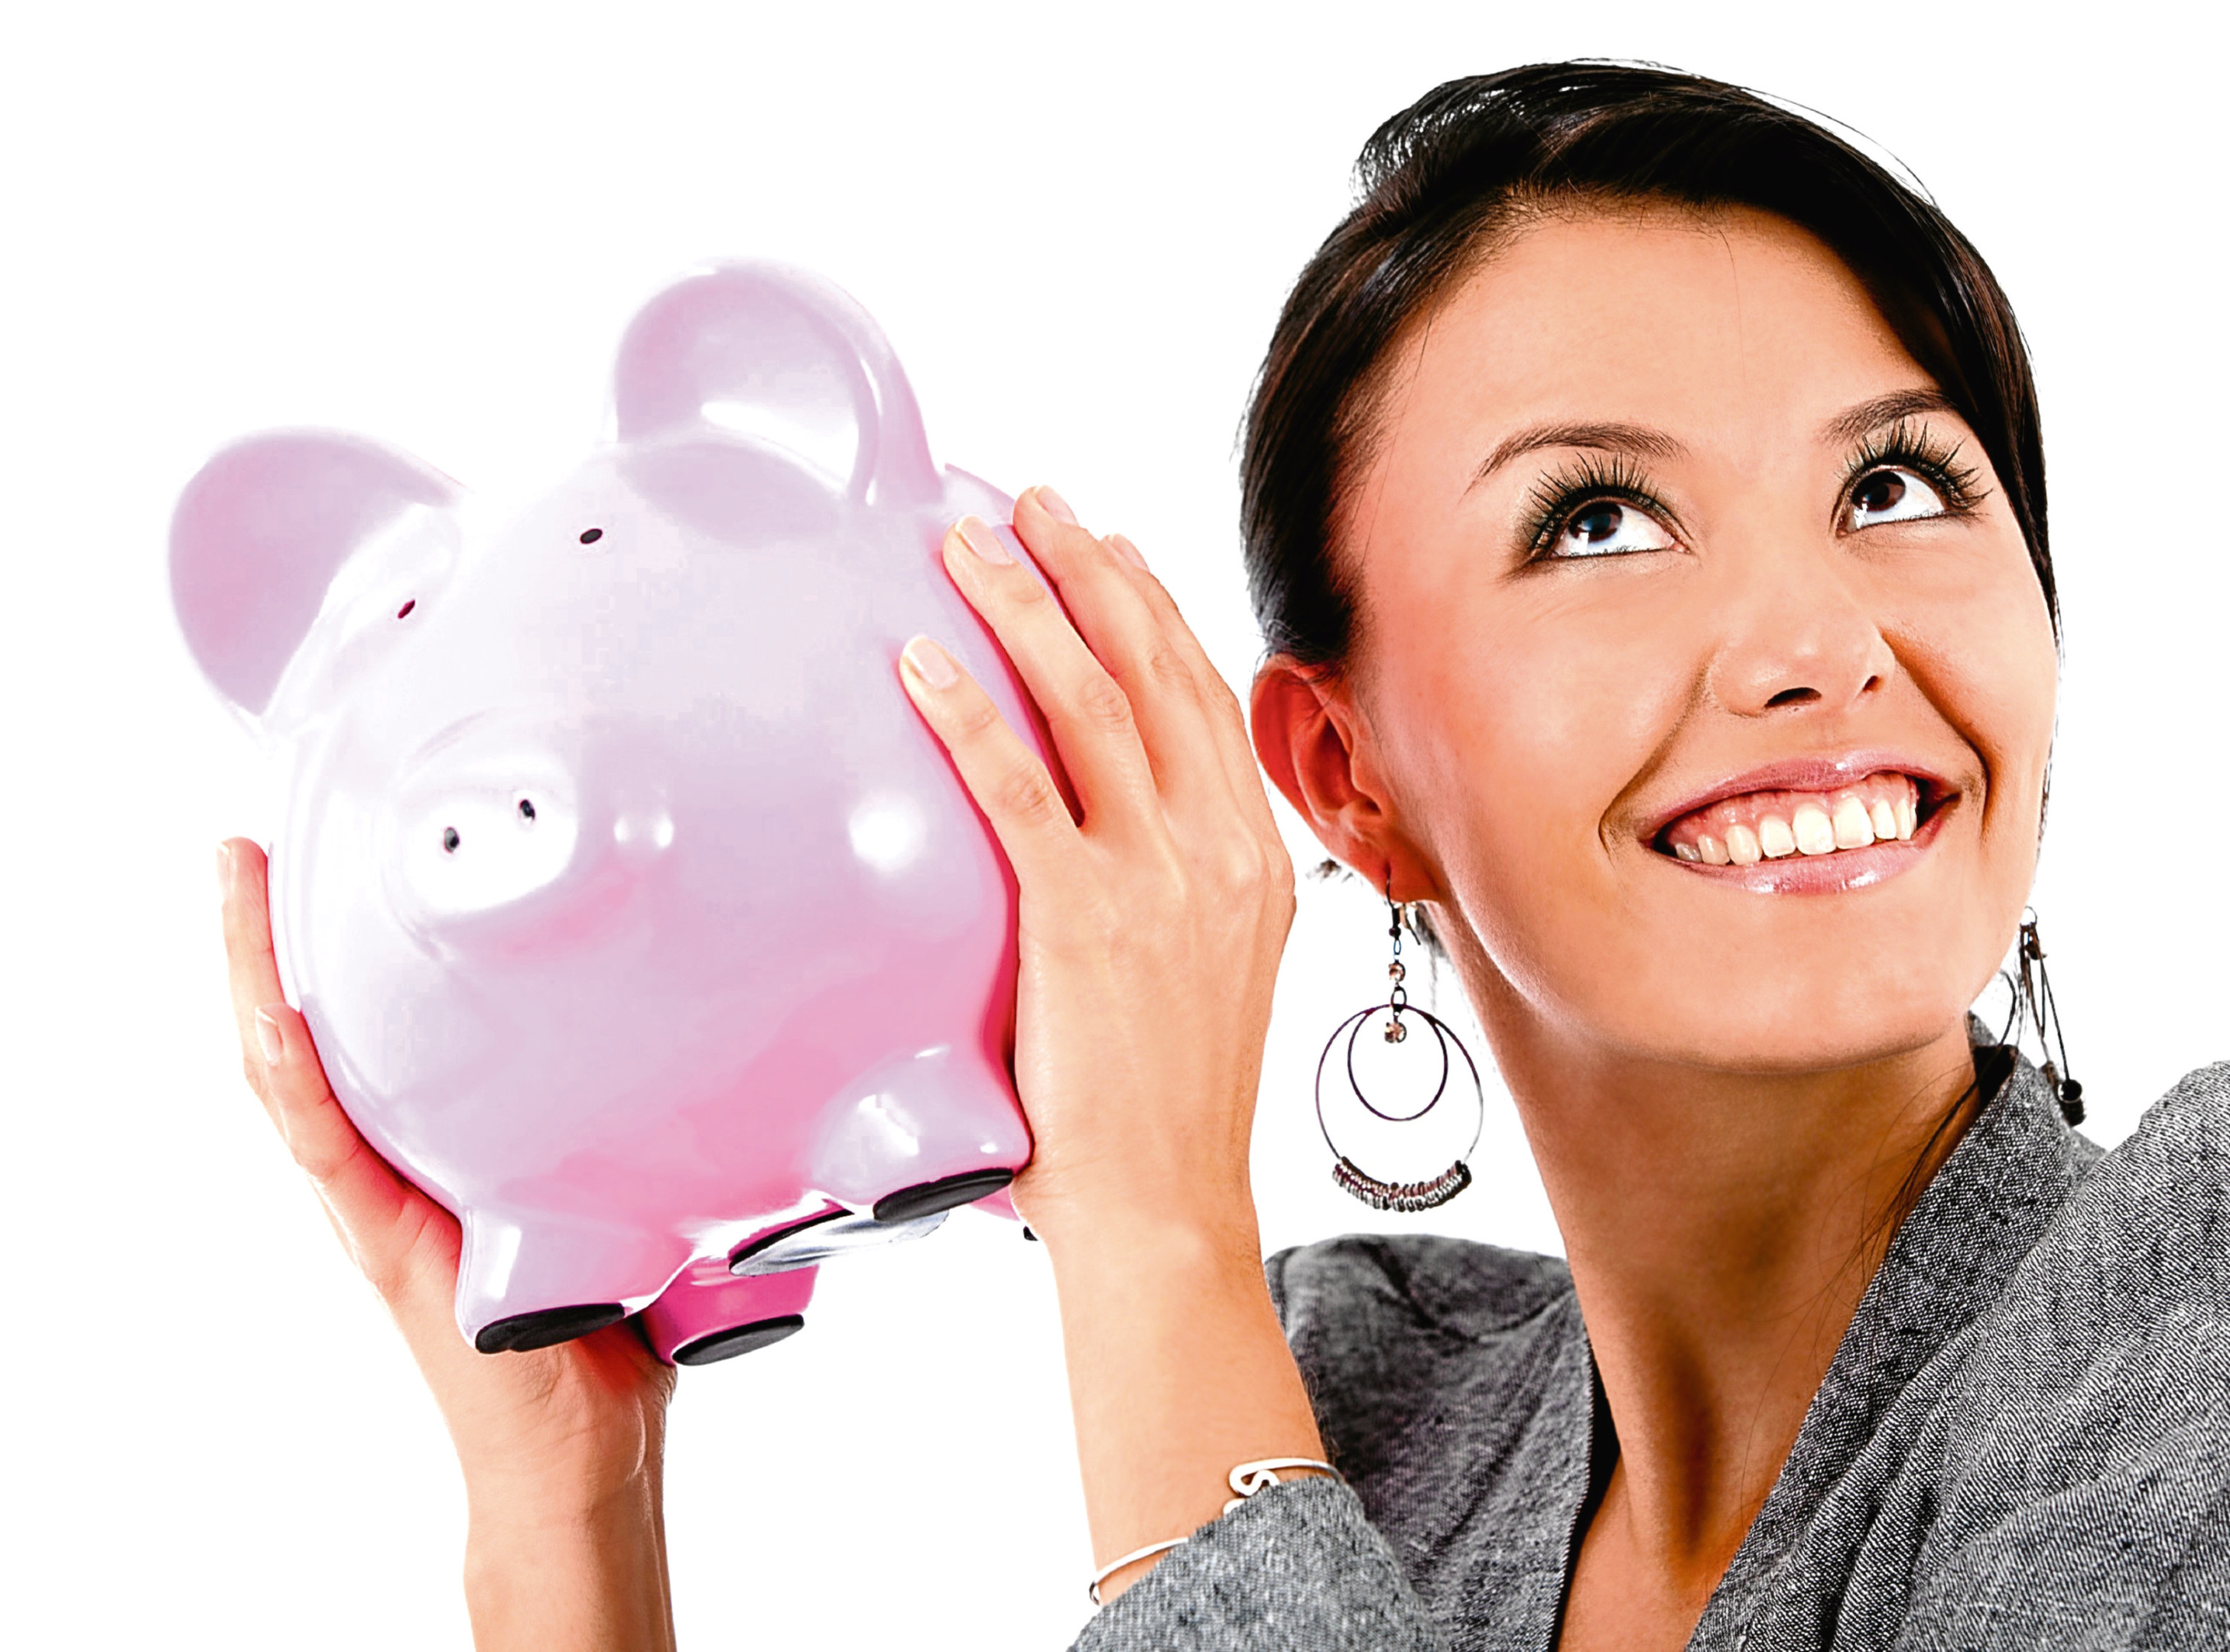 A big savings shake up is on its way. 



Piggy bank shakeup